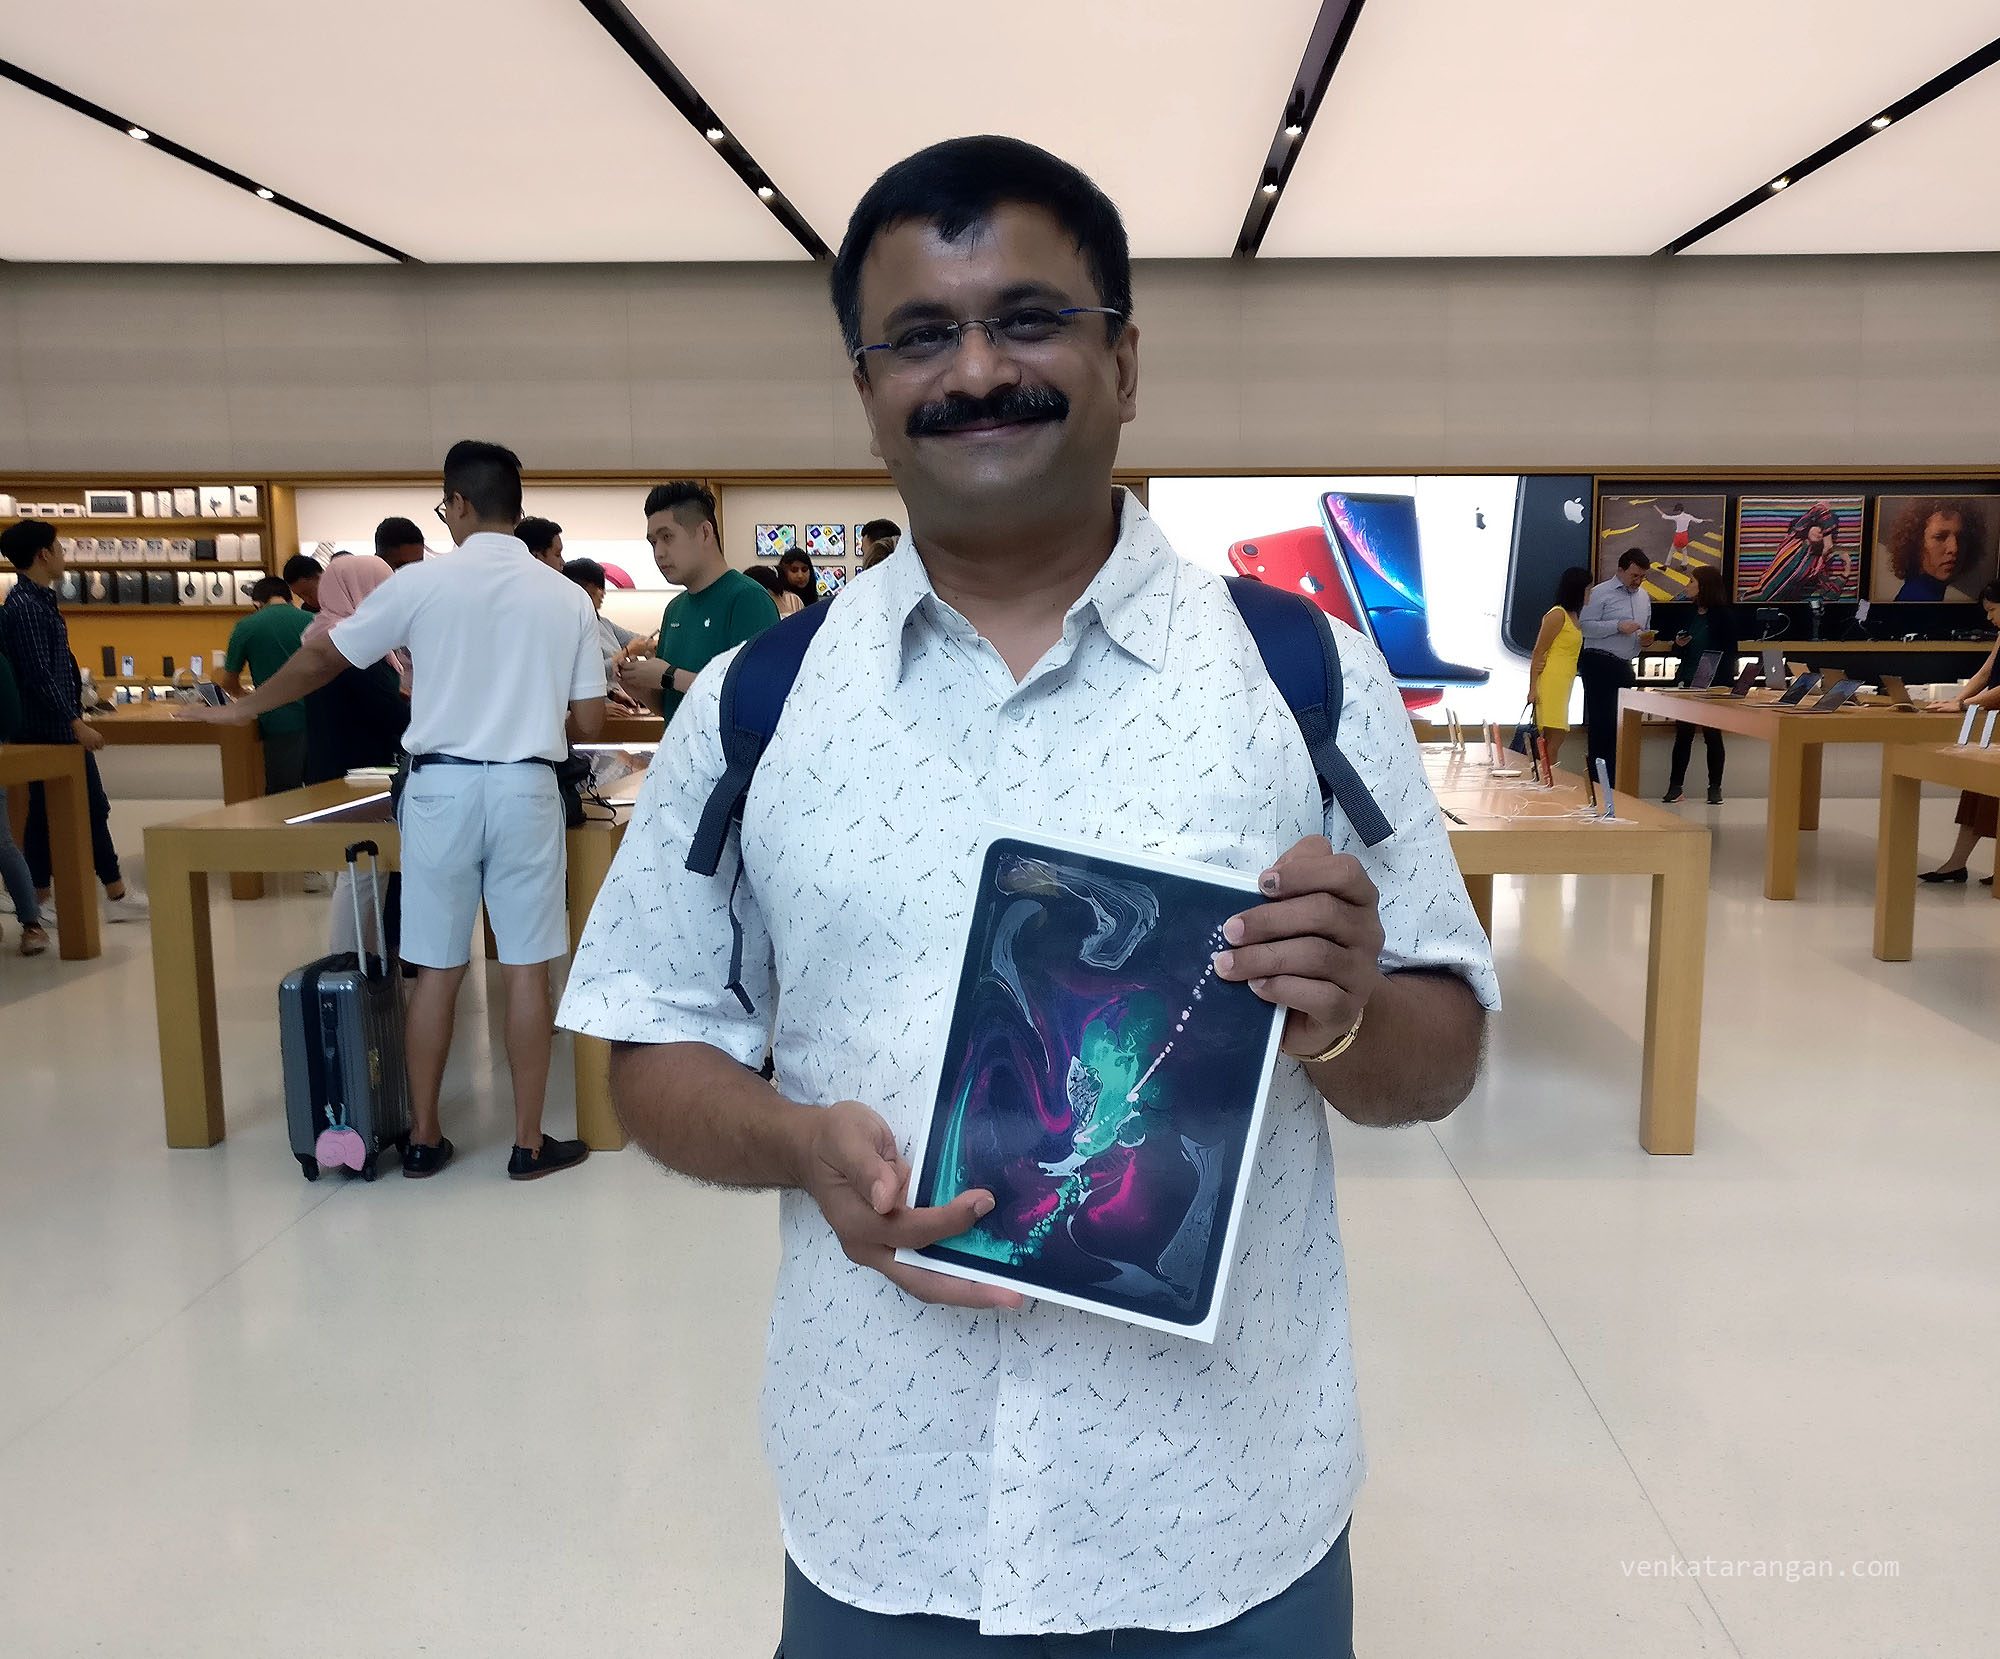 Venkatarangan with his new iPad Pro 11 at Apple Store, Orchid Road, Singapore